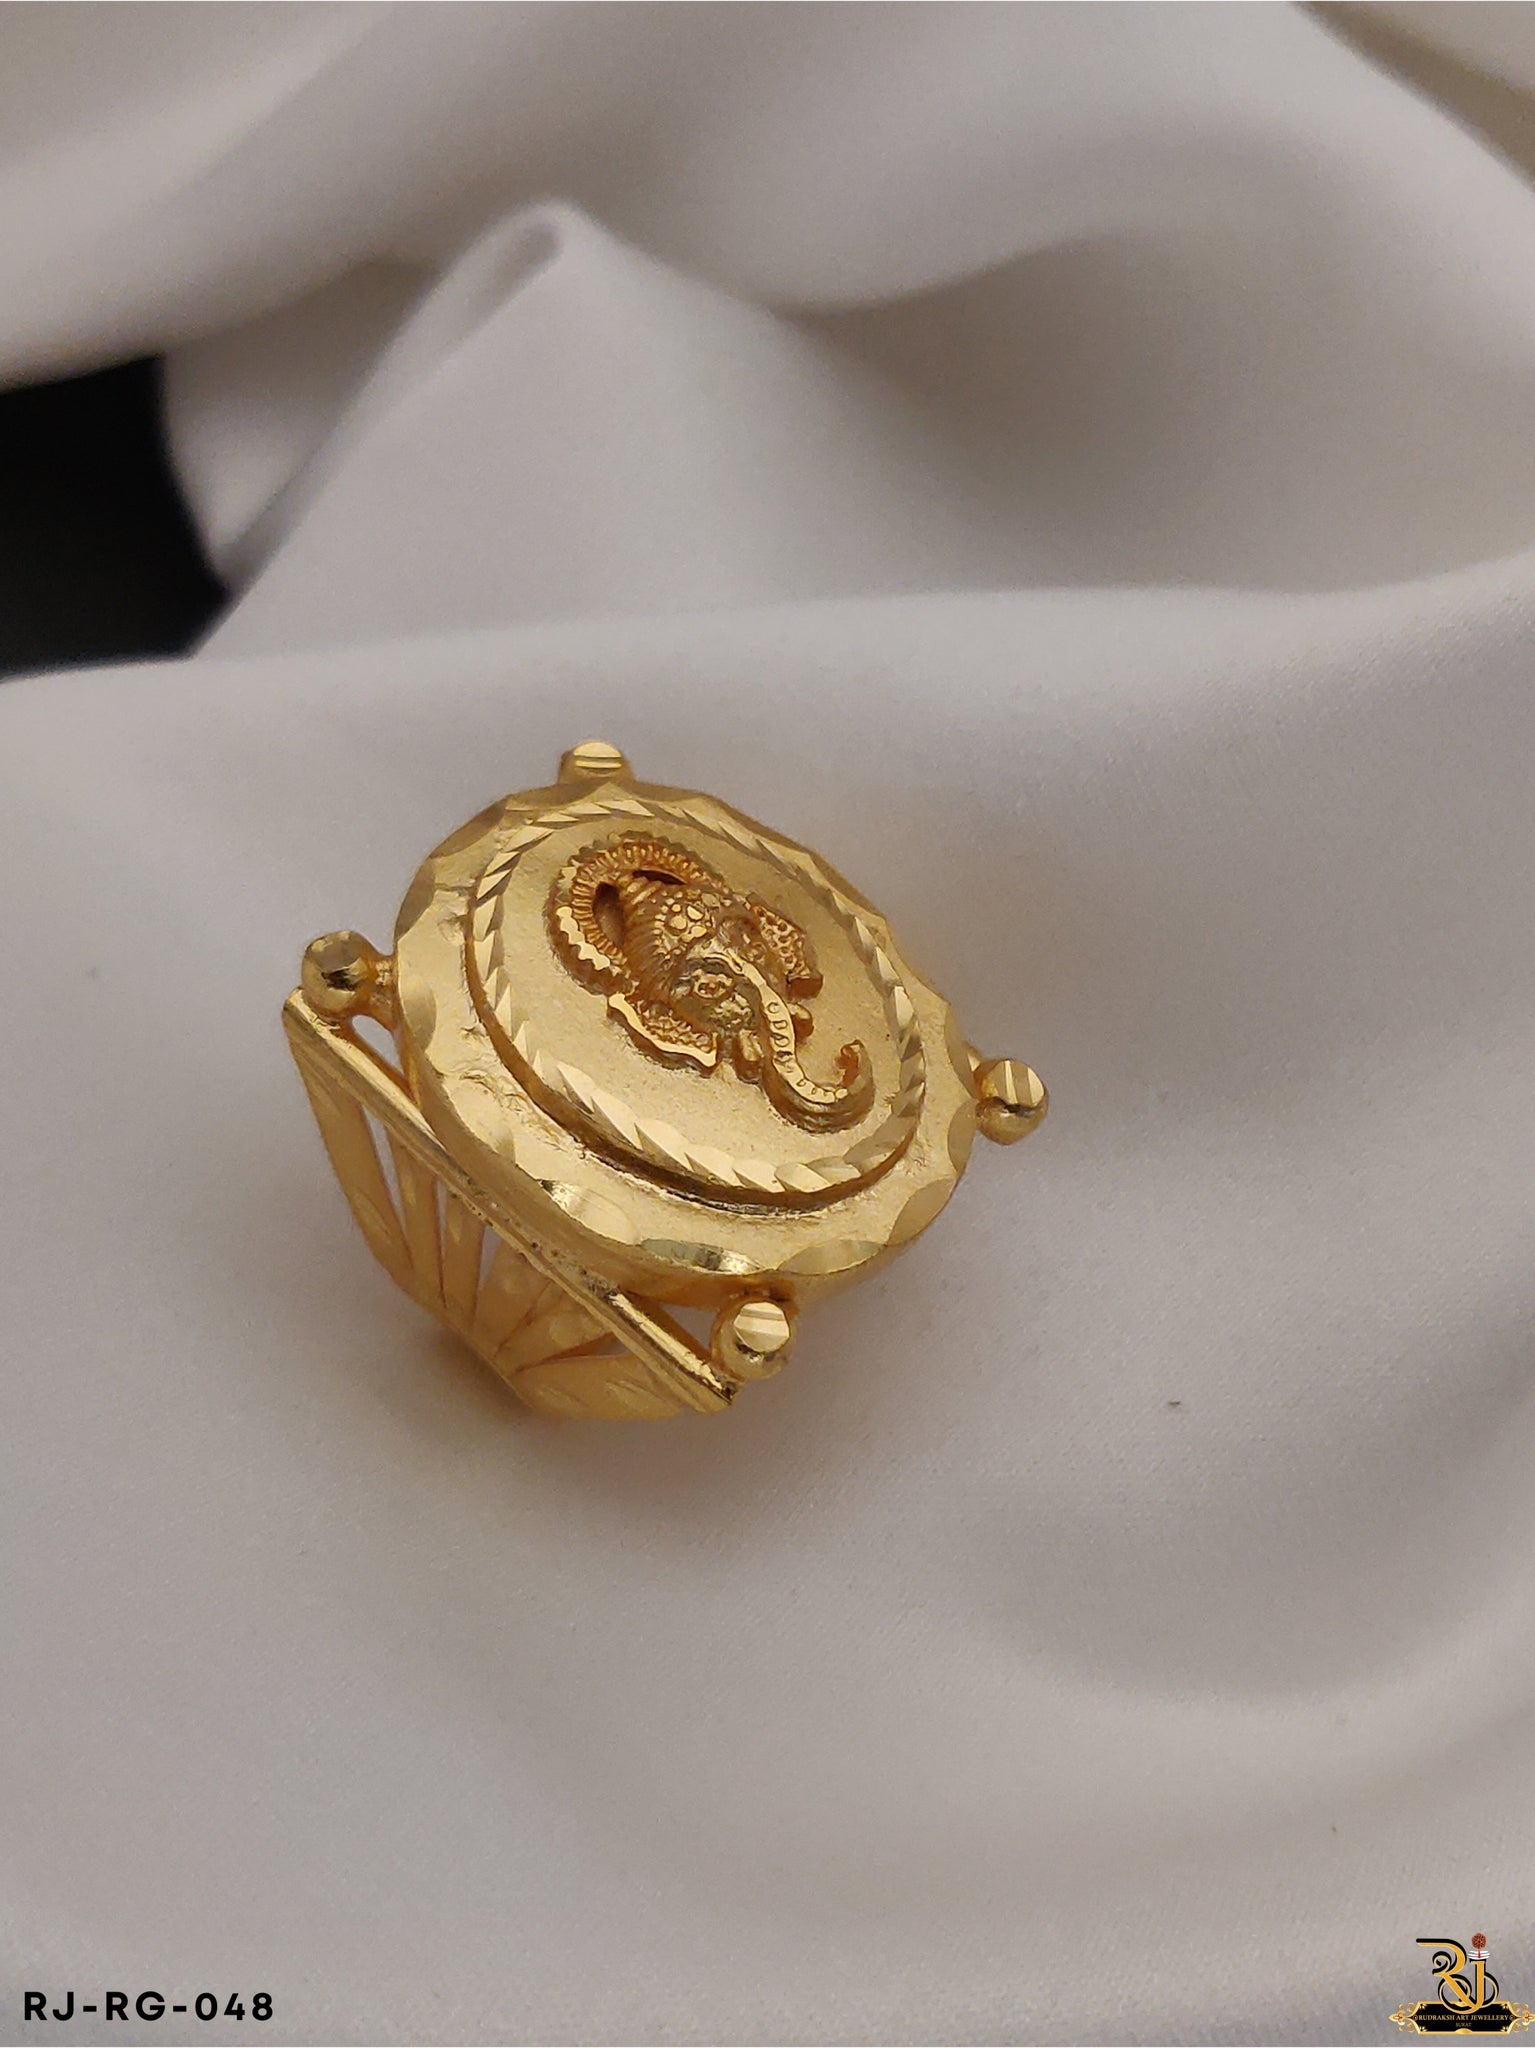 Prajna Ganpati Gold Mens Ring-Candere by Kalyan Jewellers